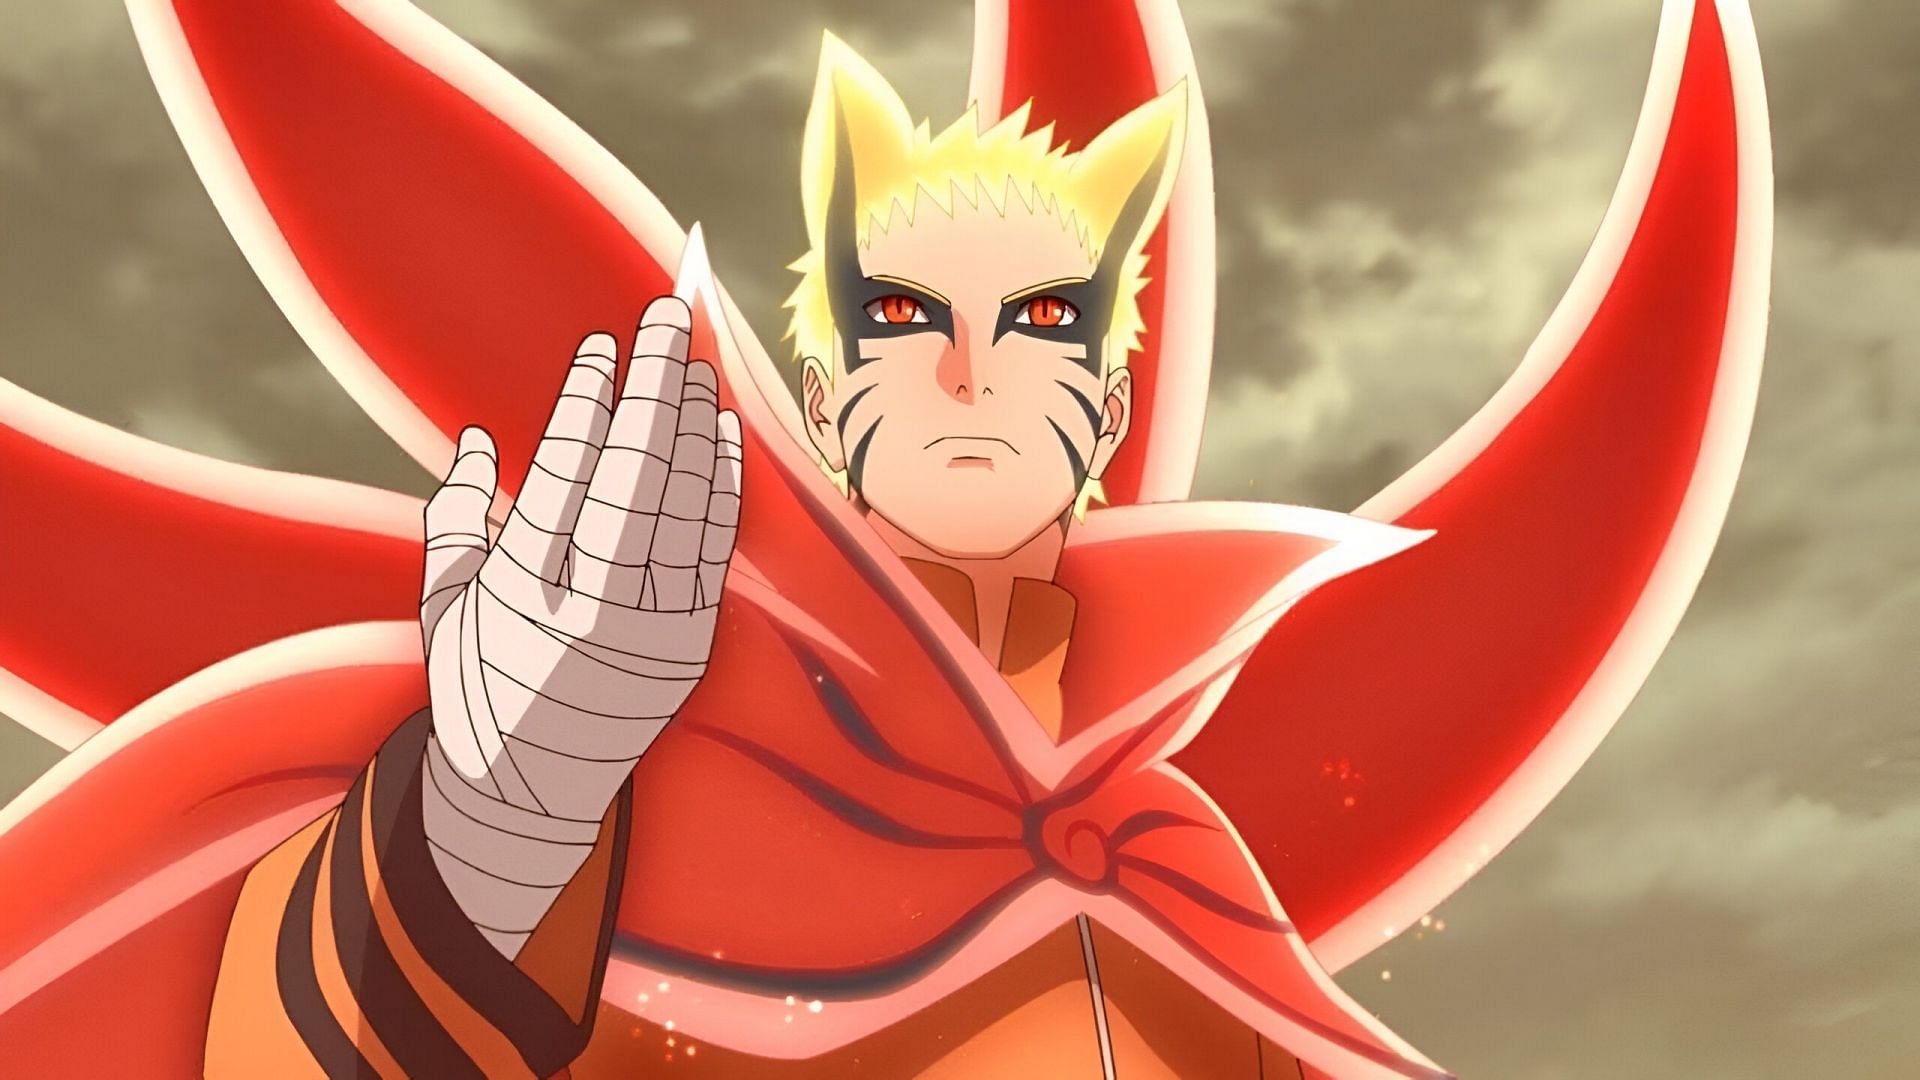 Naruto Baryon Mode as seen in the anime (Image via Studio Pierrot)